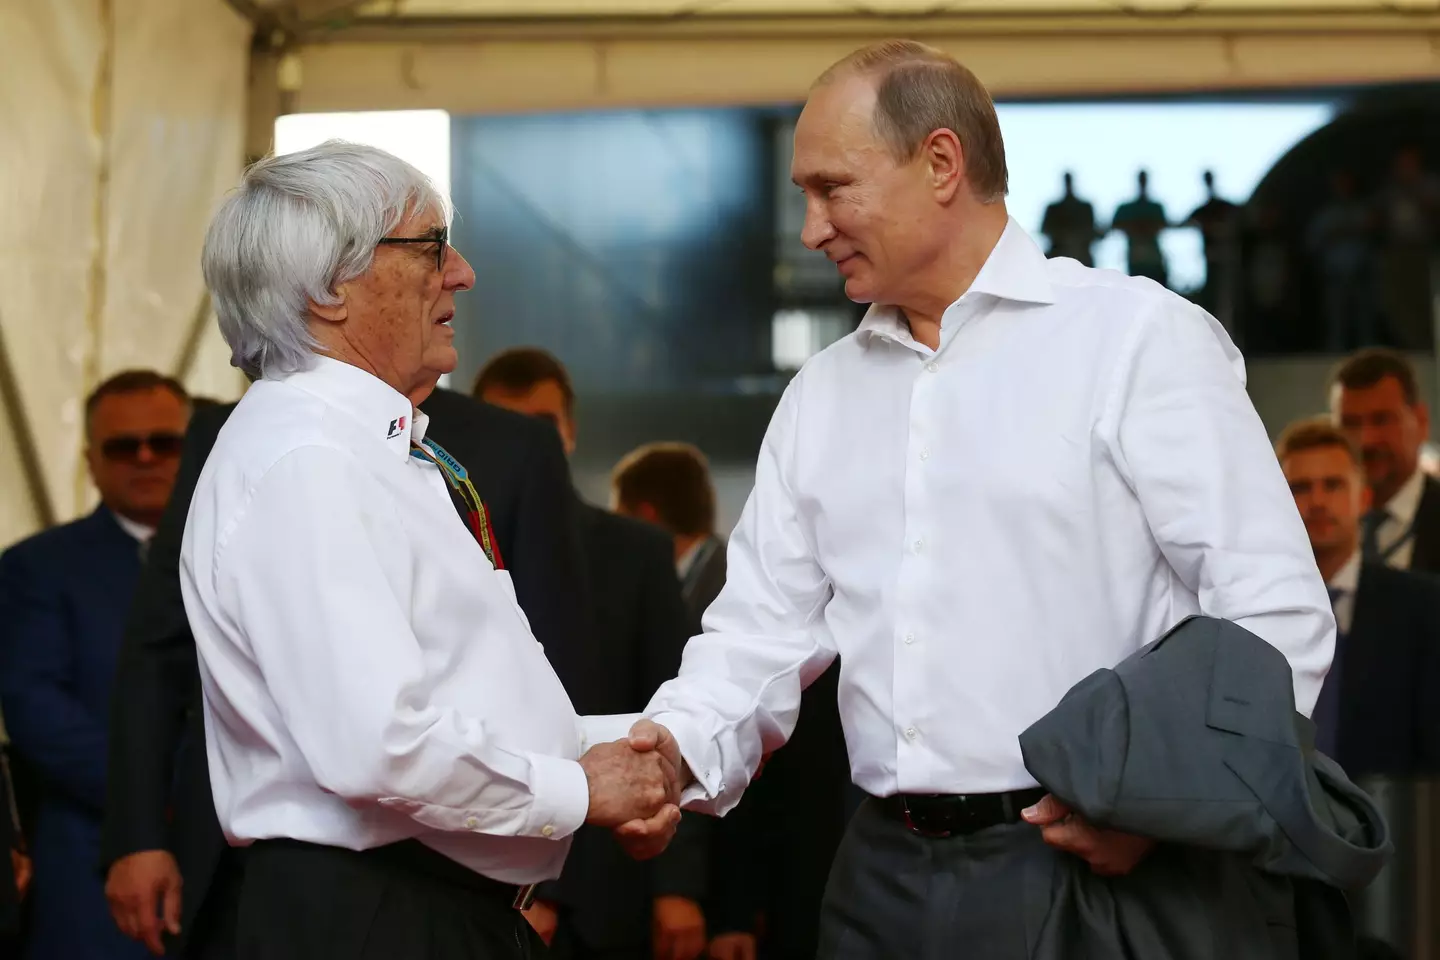 Ecclestone and Putin became friends through Formula One.